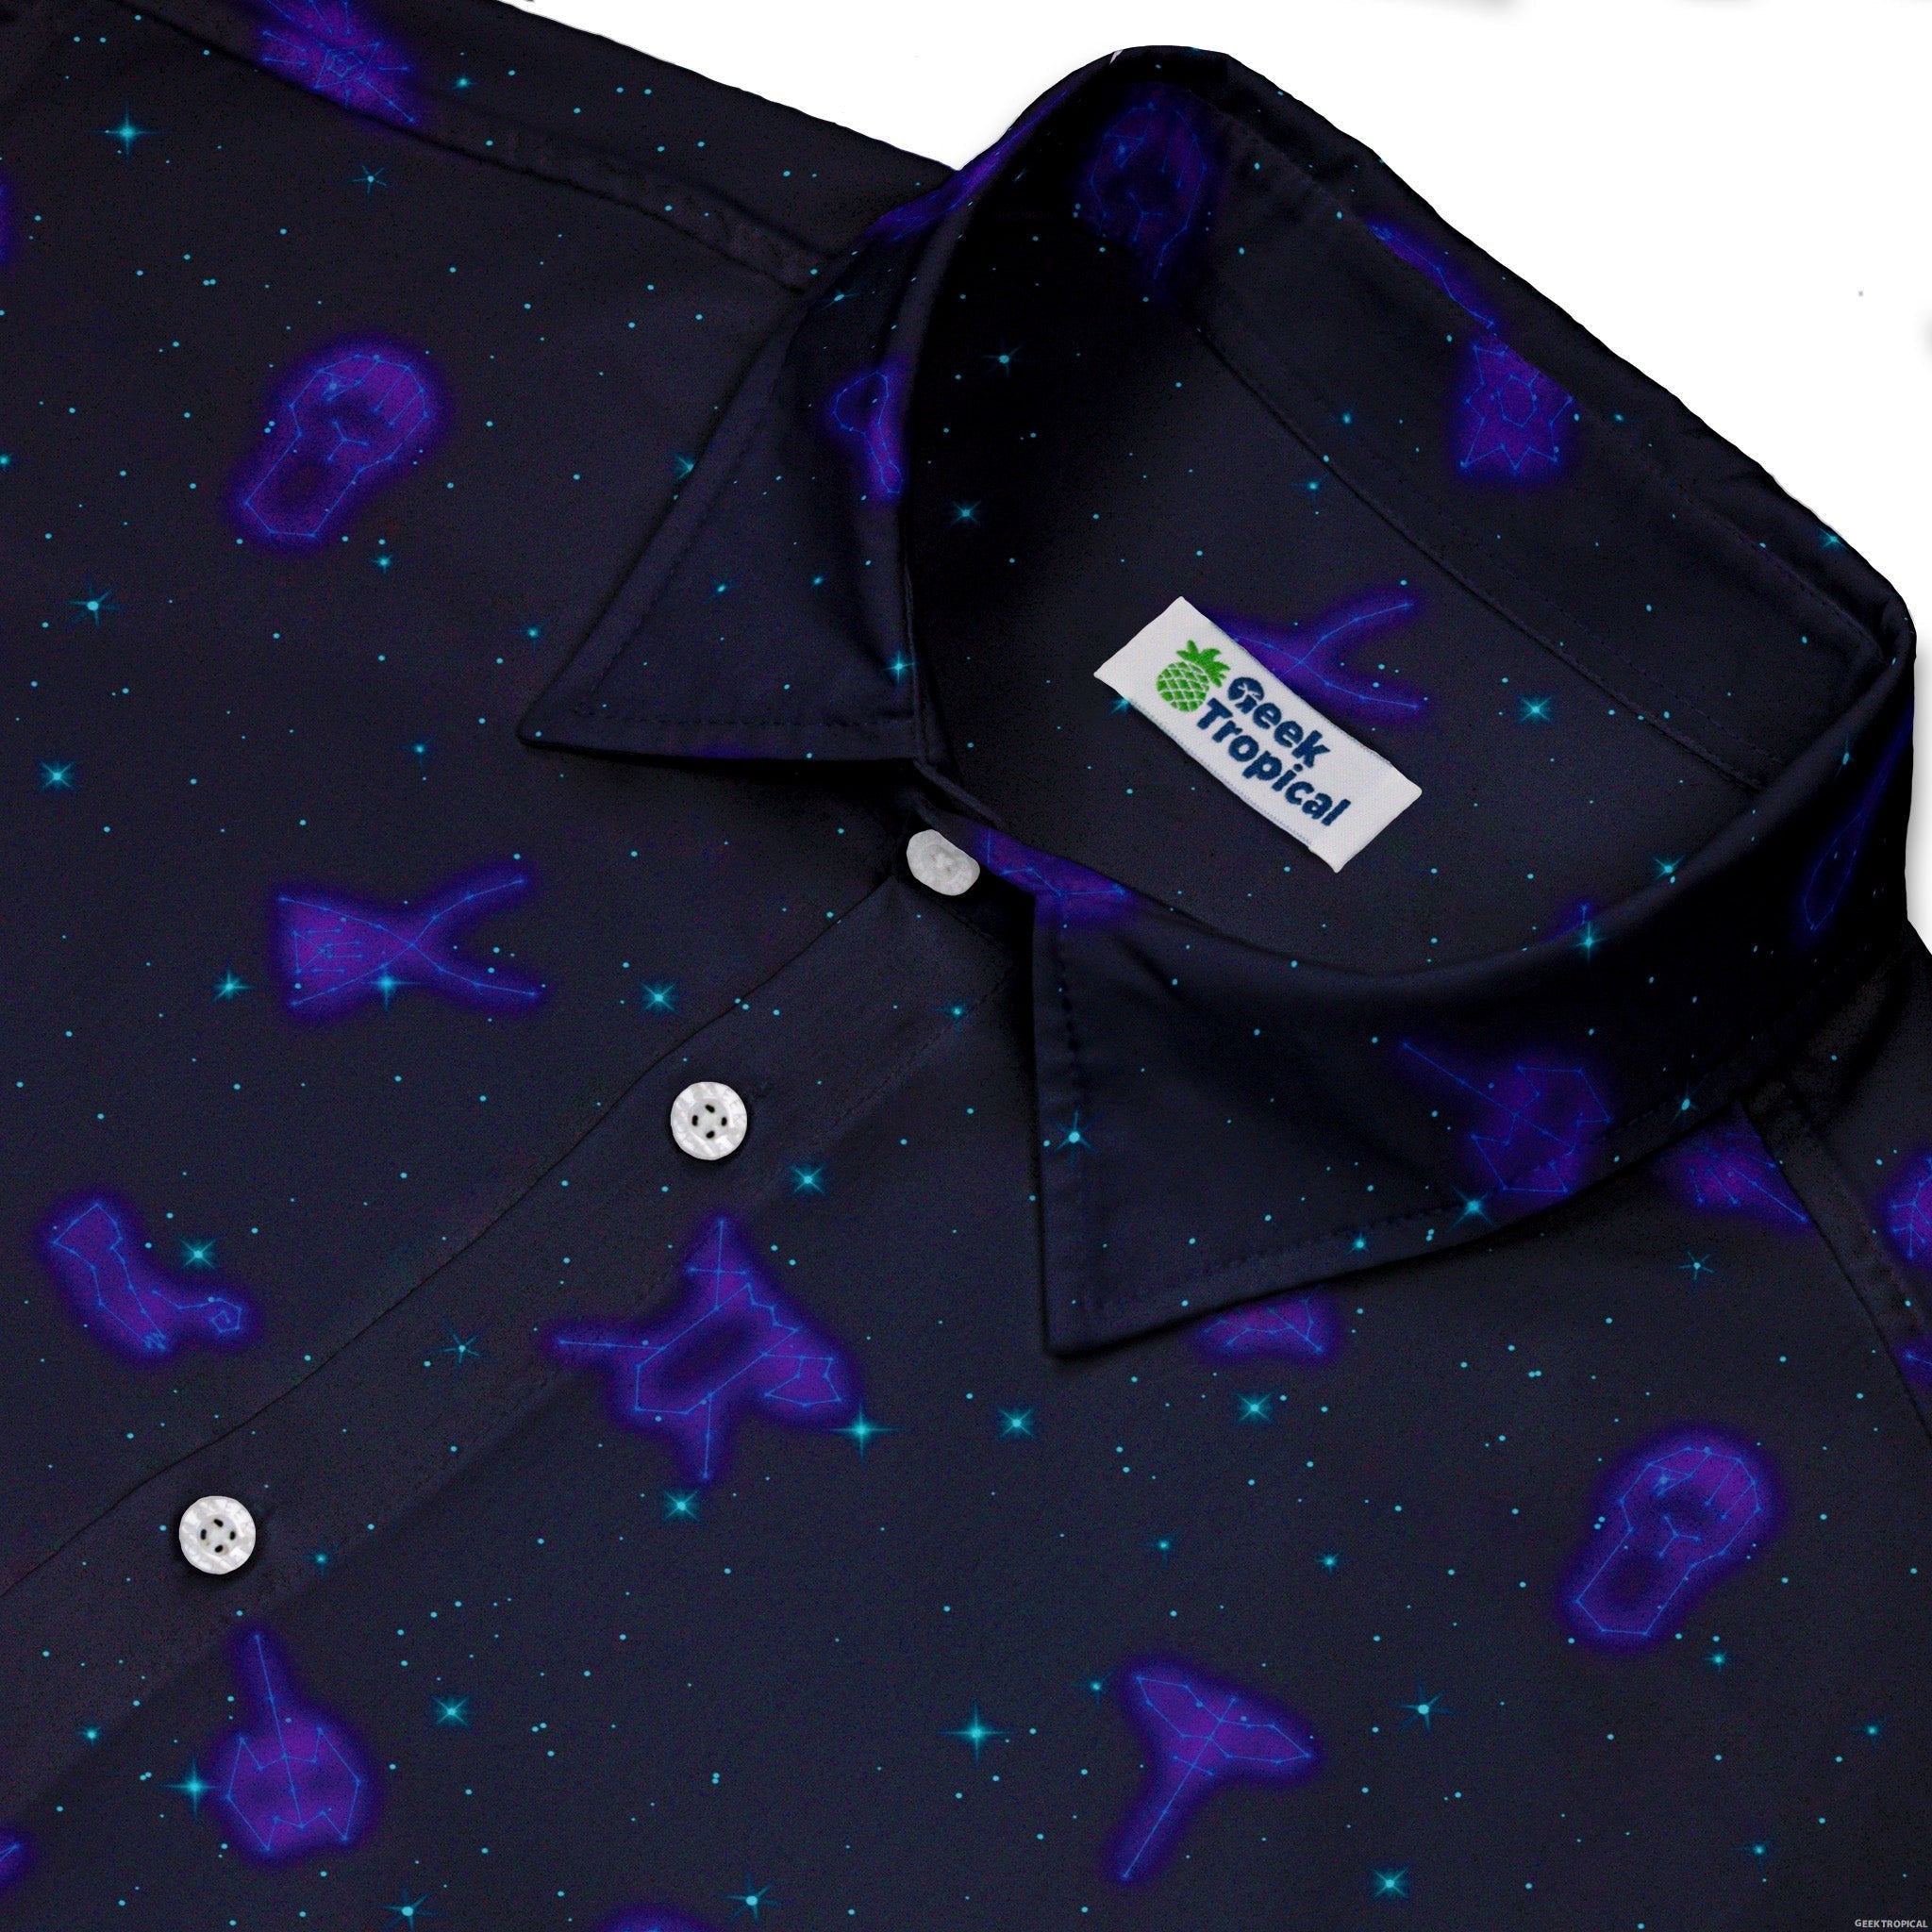 Dnd Class Constellations Button Up Shirt - adult sizing - dnd & rpg print -